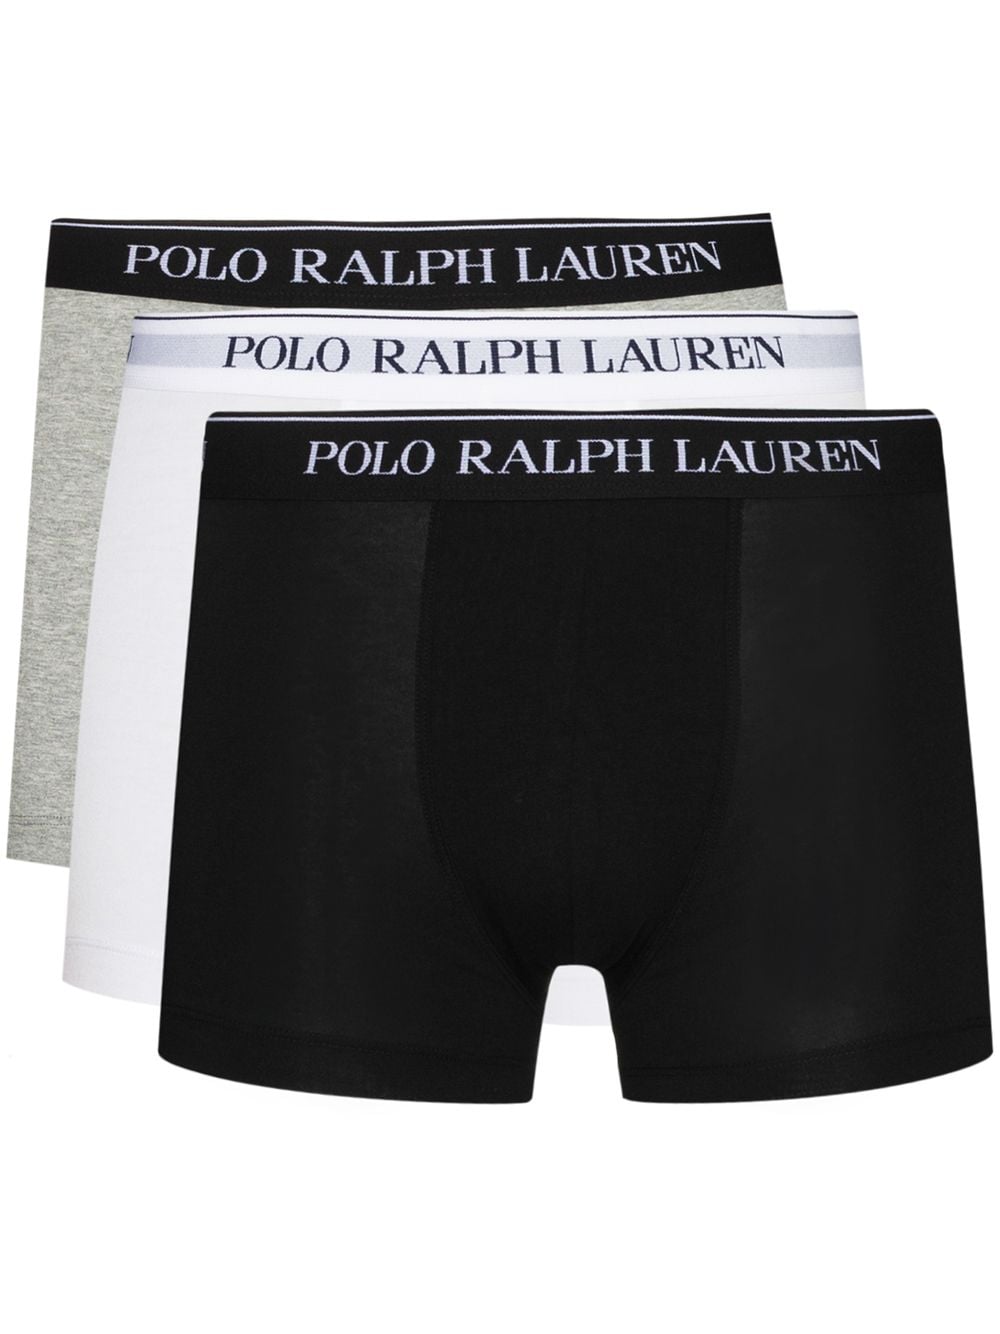 фото Polo ralph lauren комплект из трех трусов-брифов с логотипом